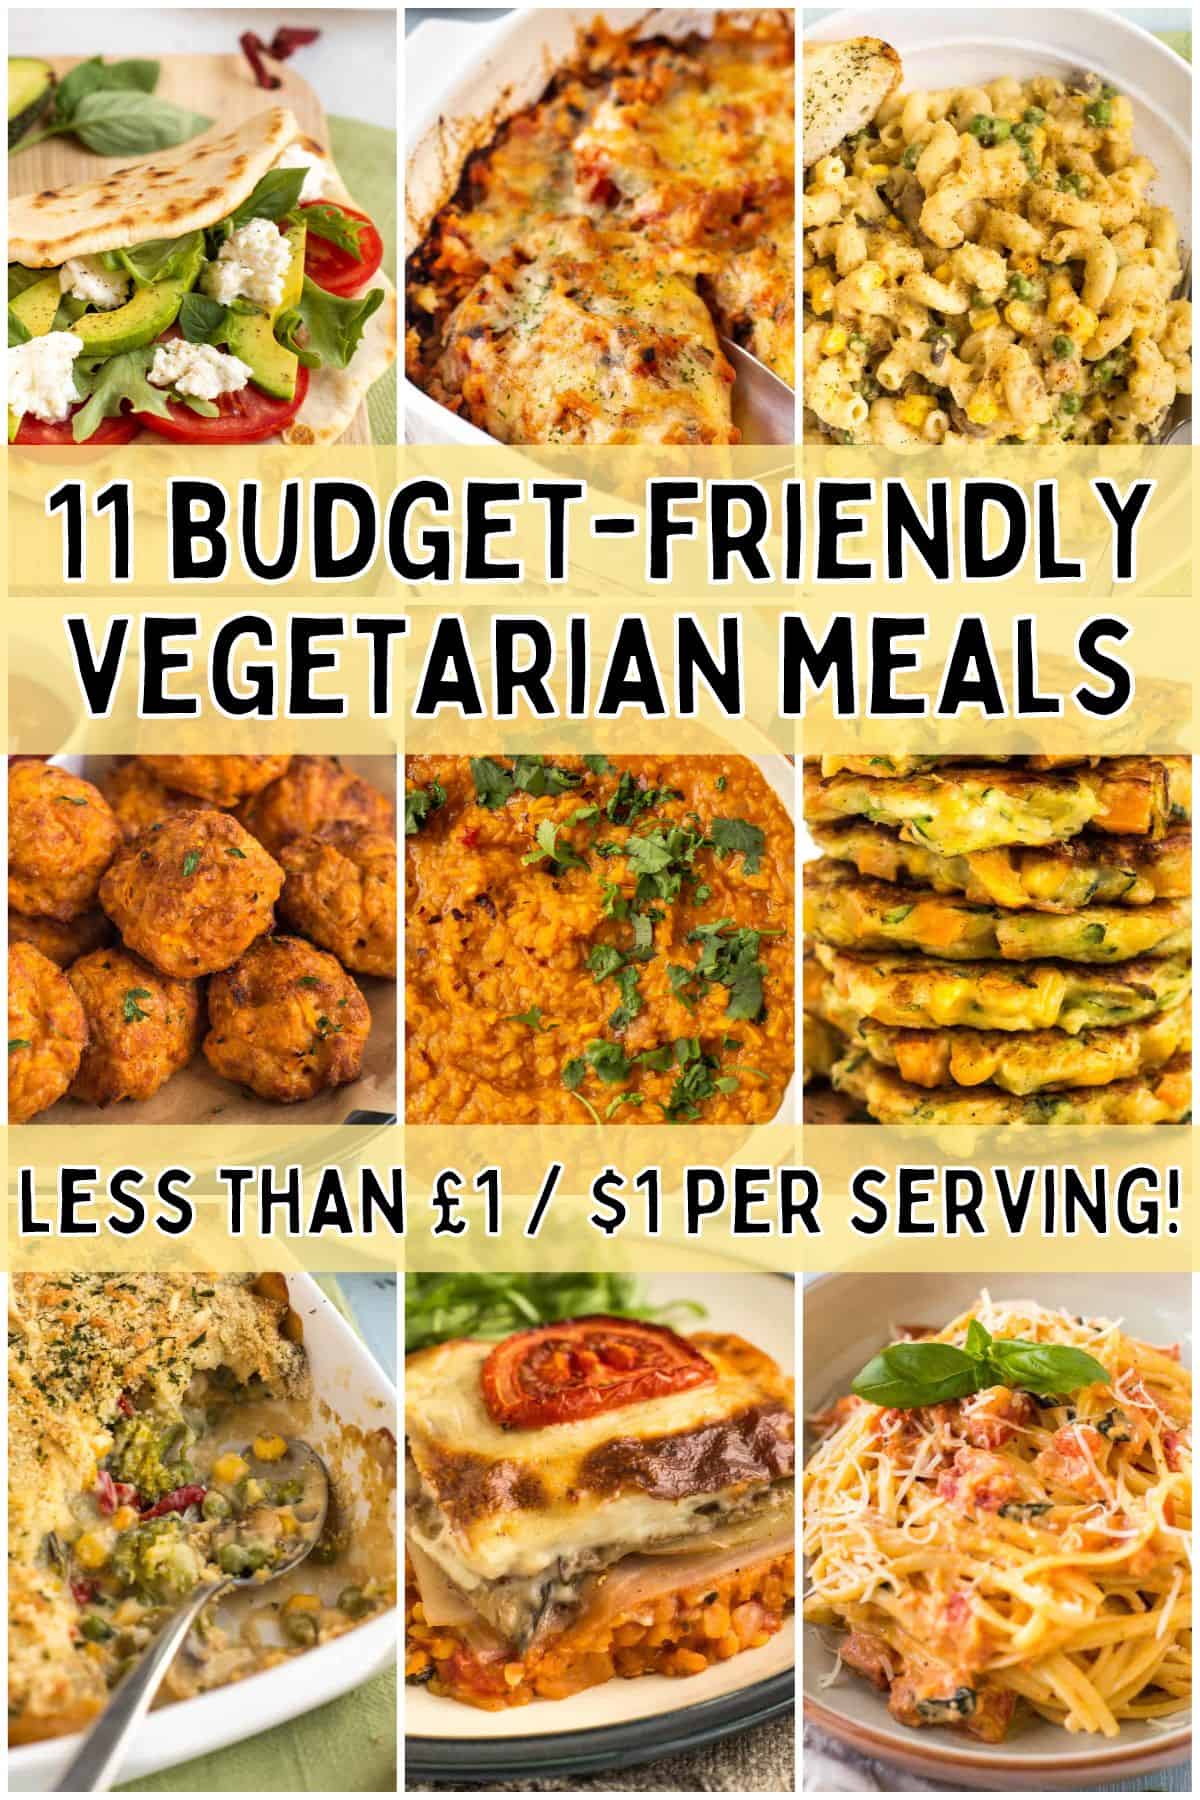 Cost-saving vegetarian dining